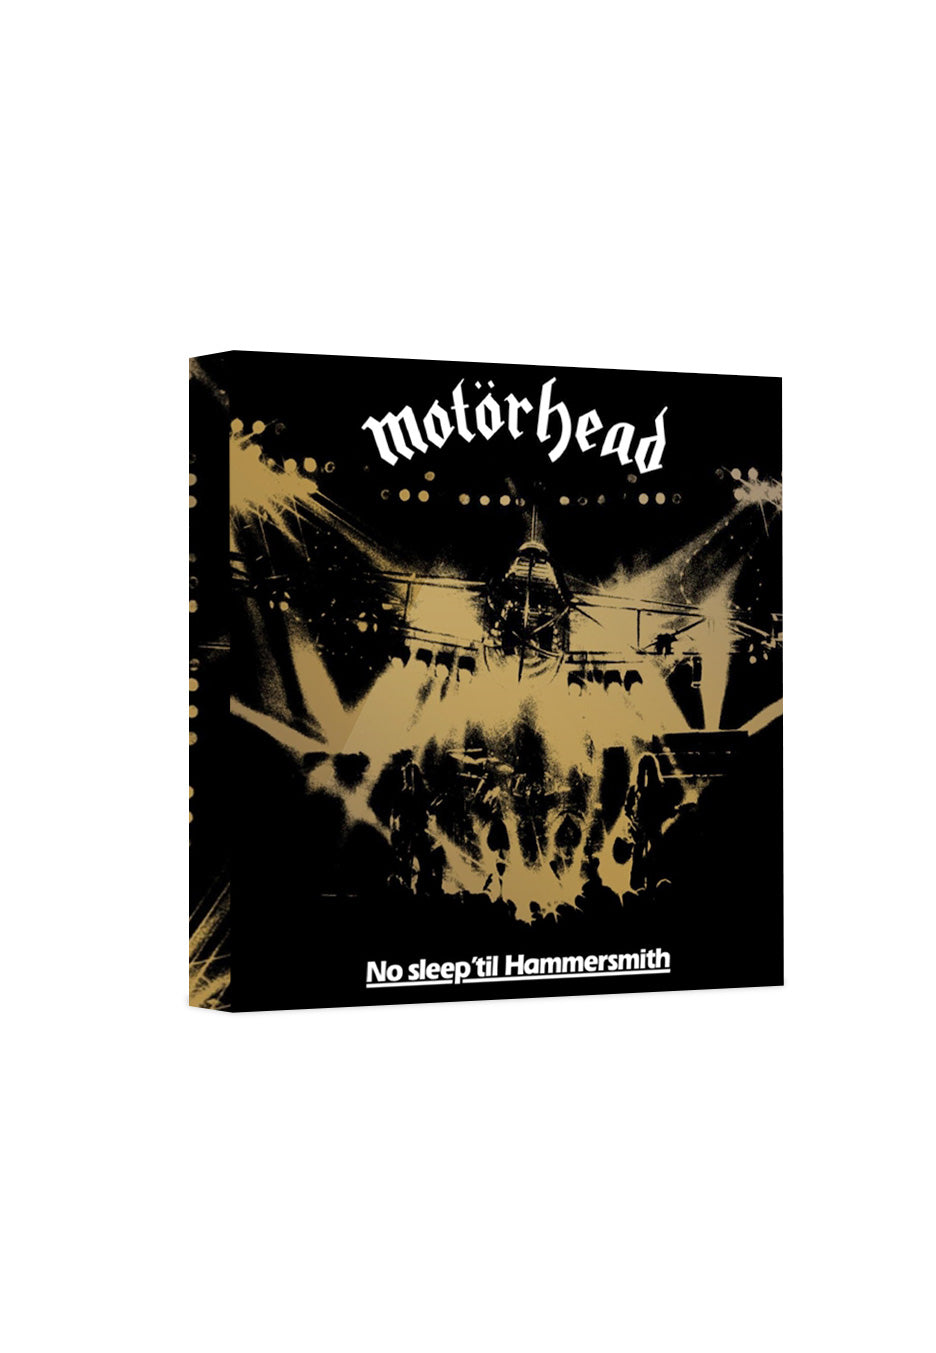 Motörhead - No Sleep 'Til Hammersmith (40th Anniversary Deluxe Edition) - CD Box